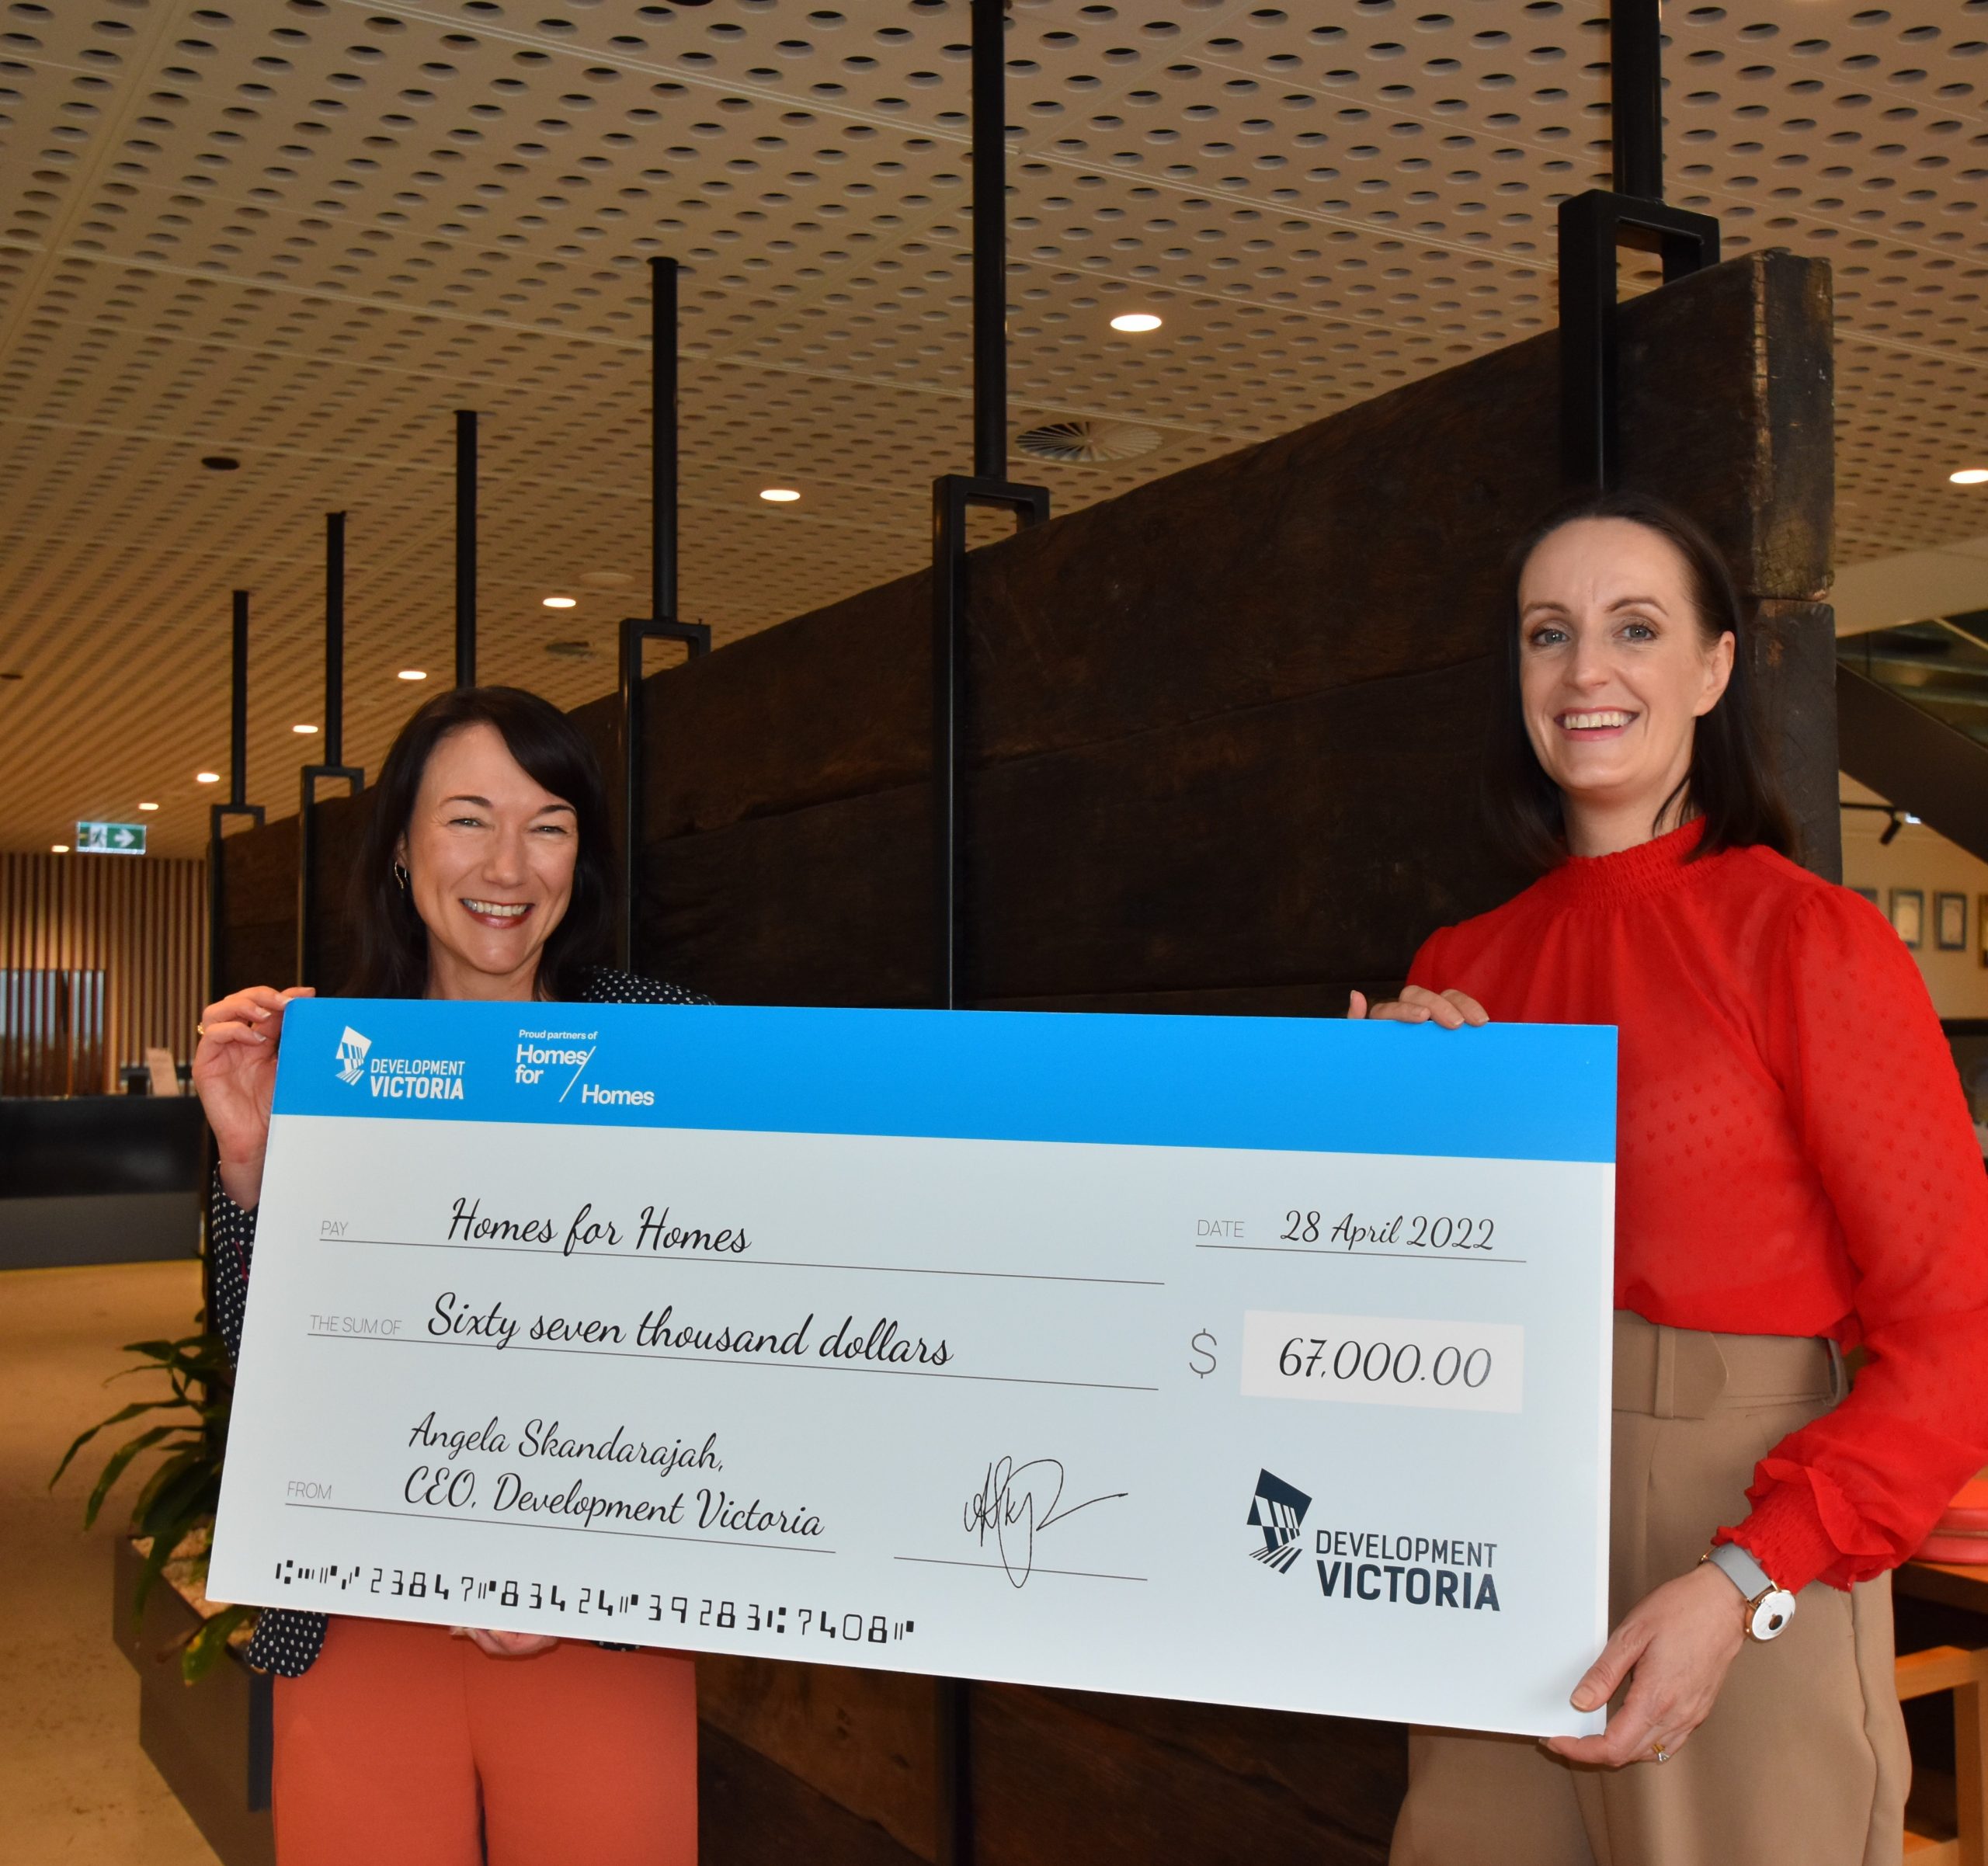 Development Victoria donates $67,000 to Homes for Homes